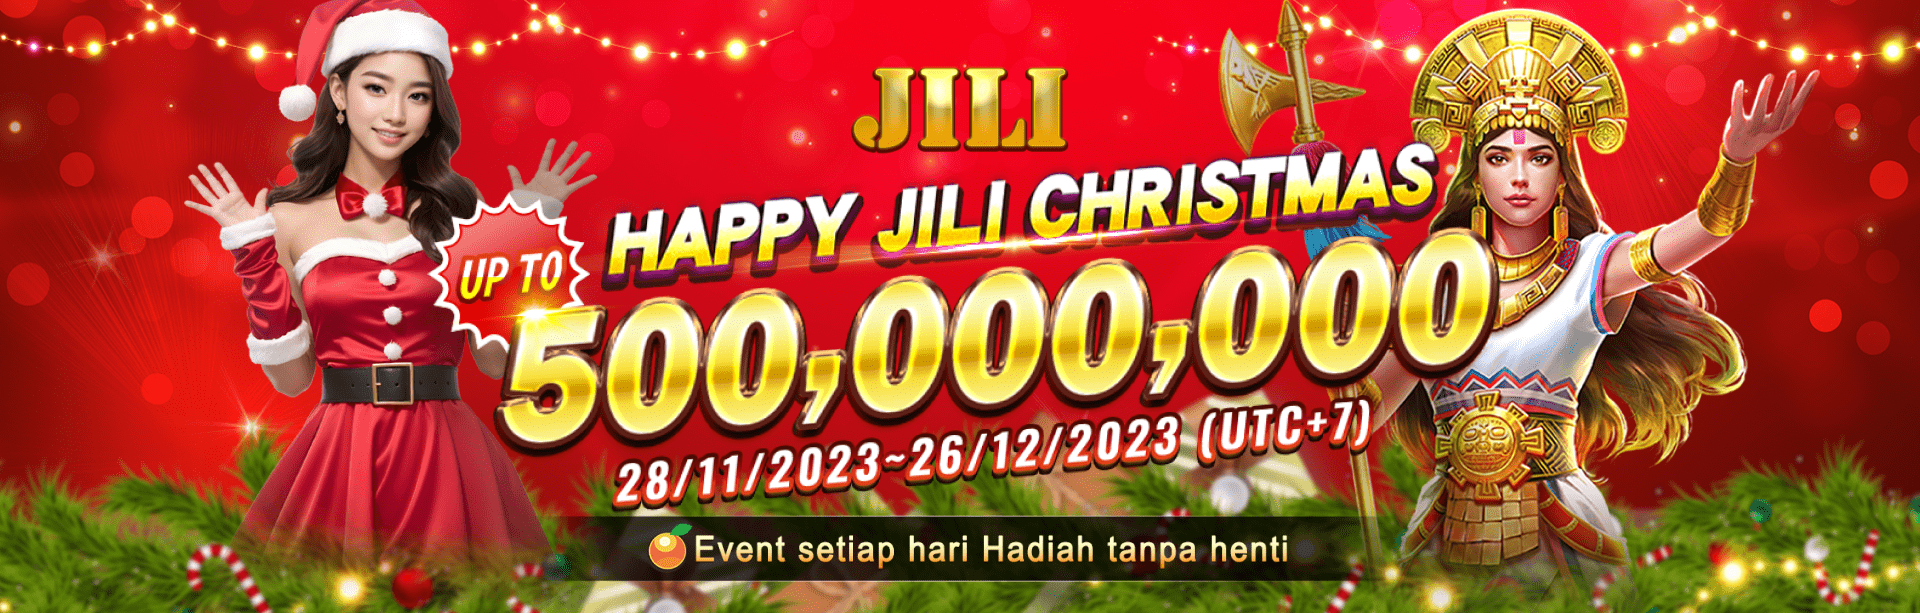 JILI HAPPY CHRISTMAS